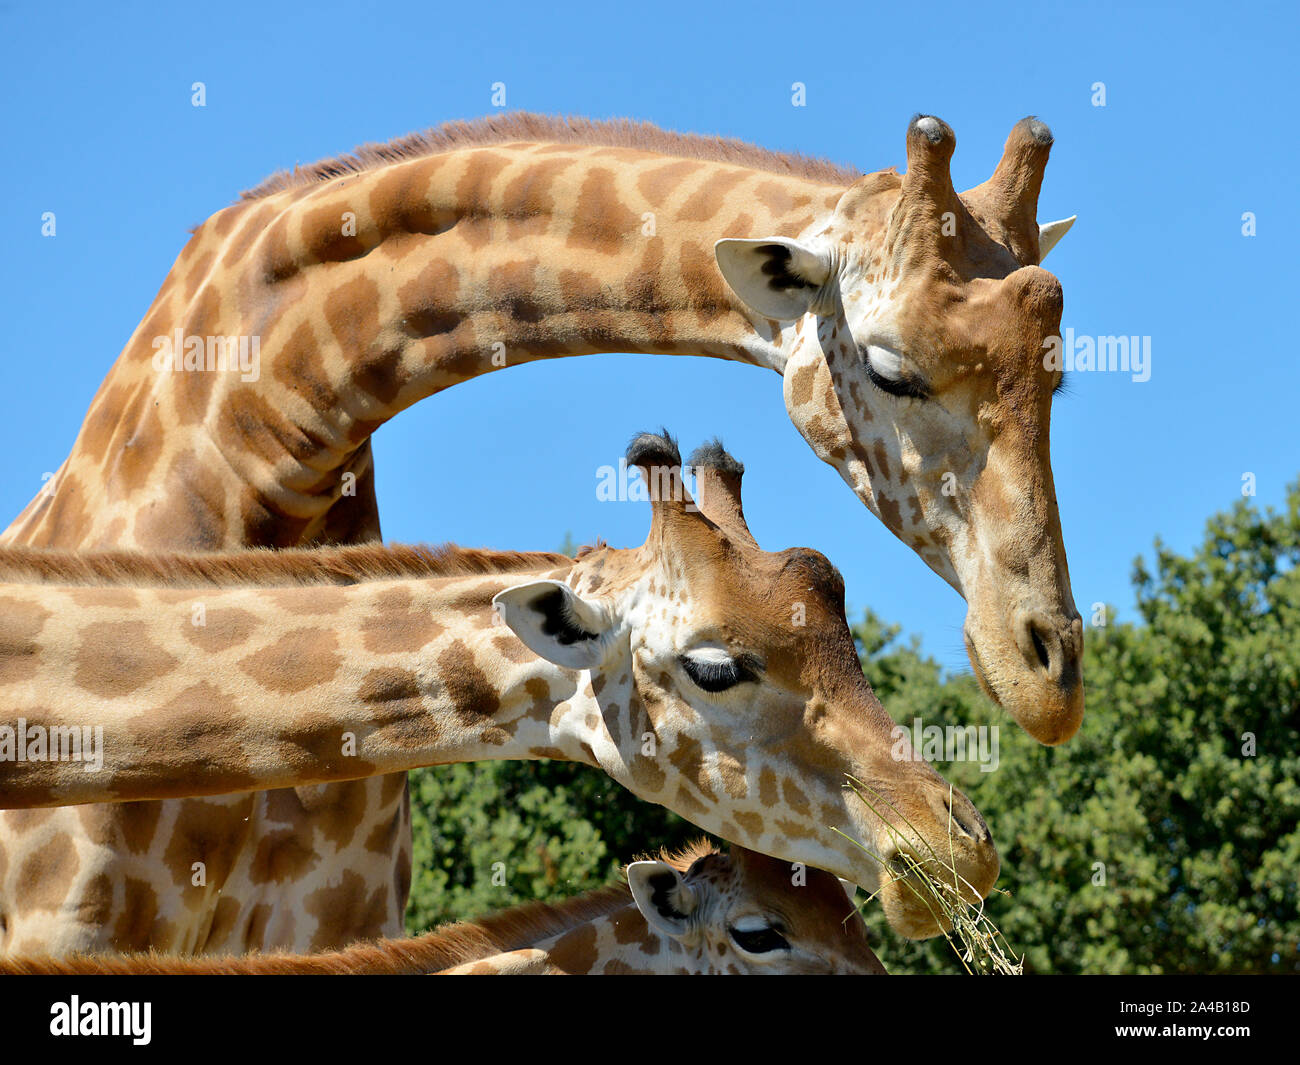 Closeup of two giraffes (Giraffa camelopardalis) eating seen from profile Stock Photo